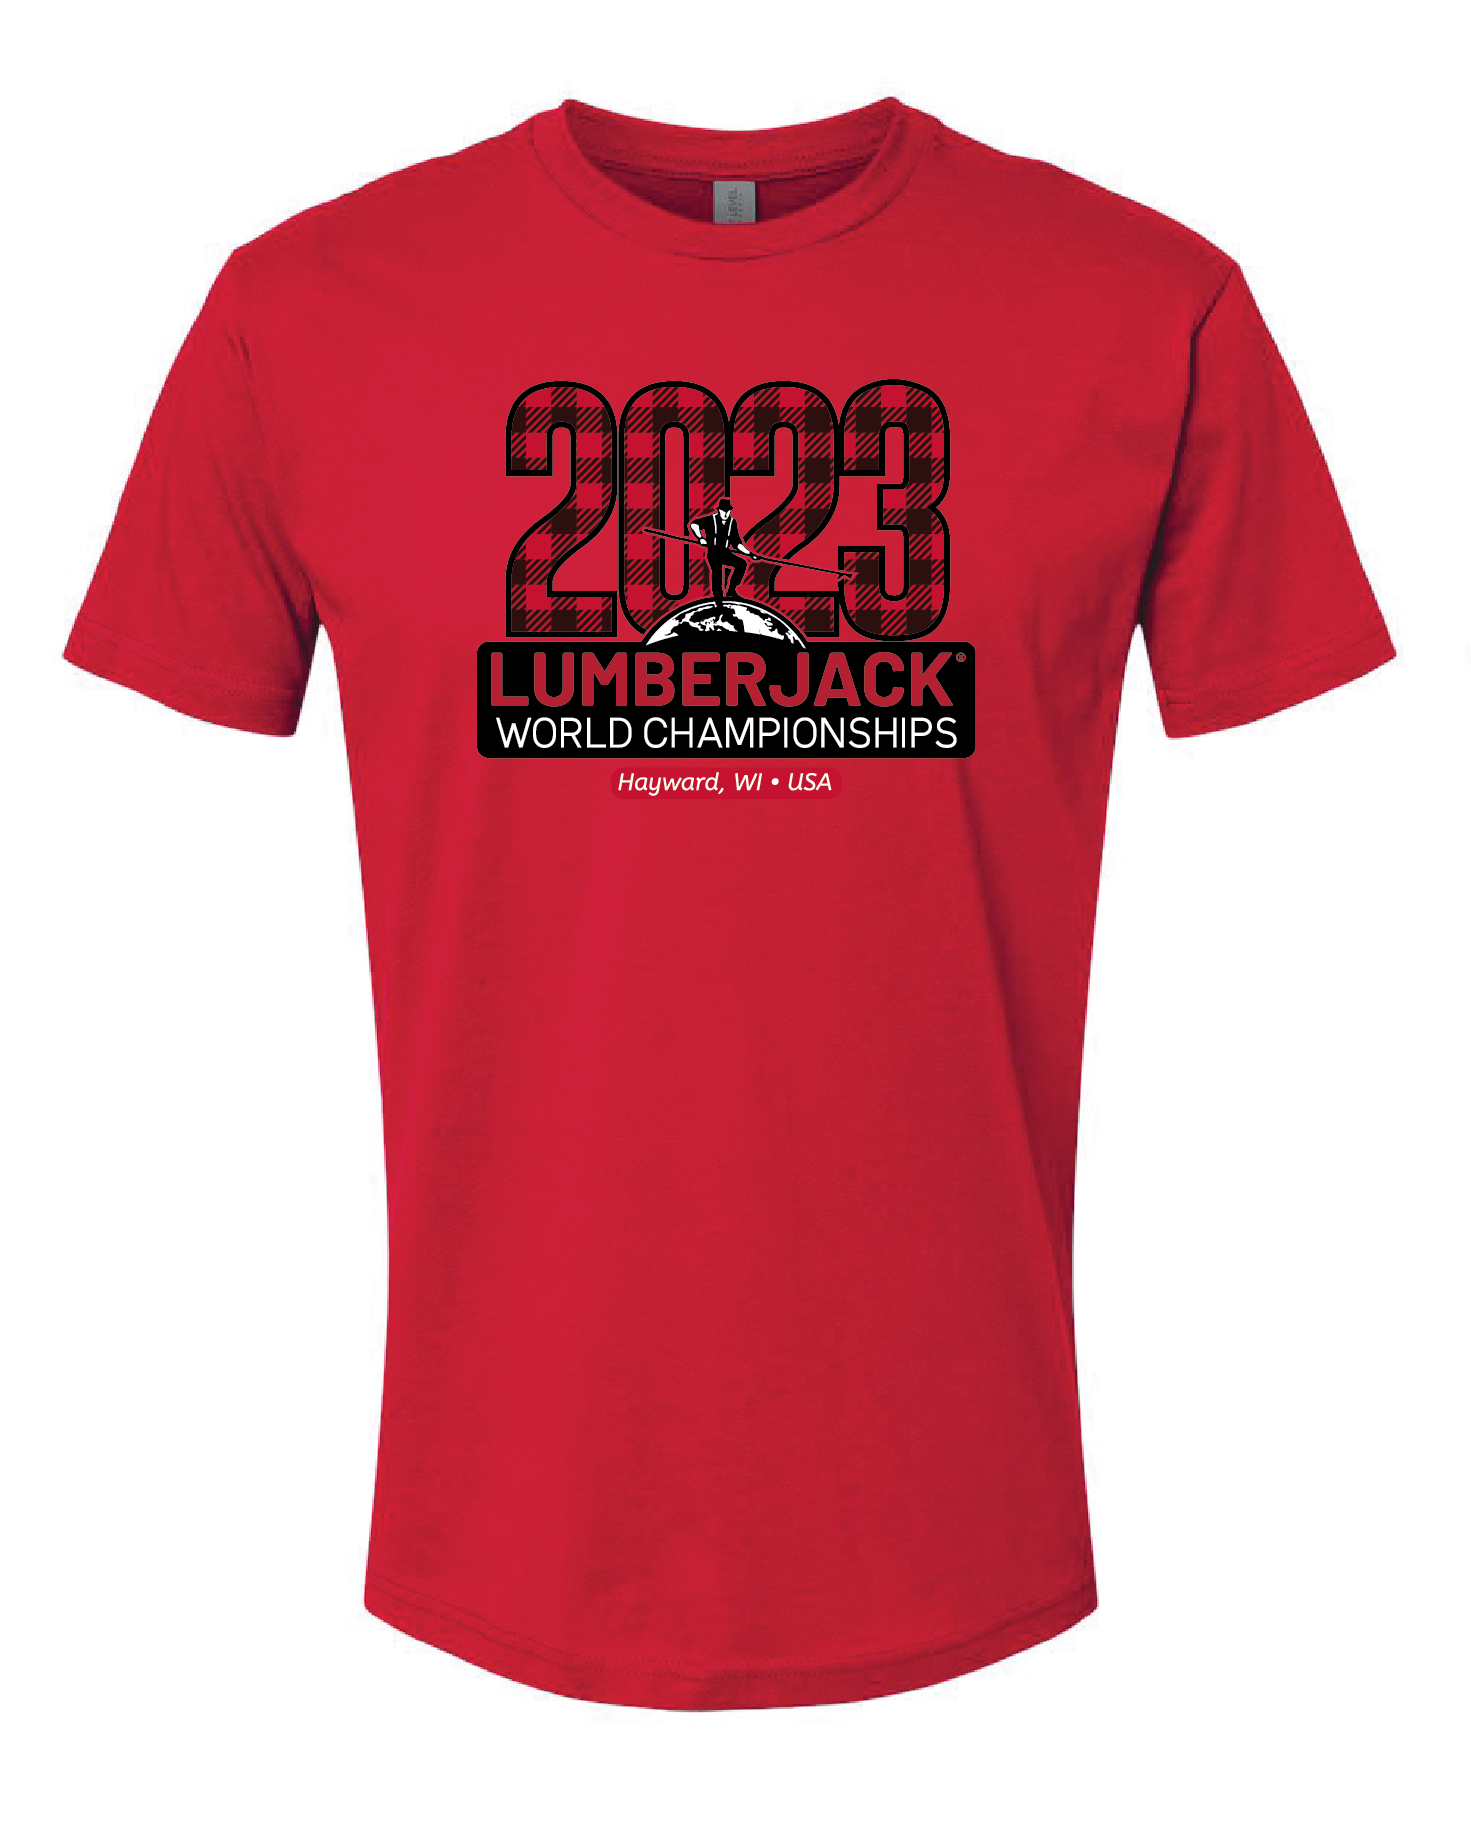 The lumberjack shirt is back for 2023